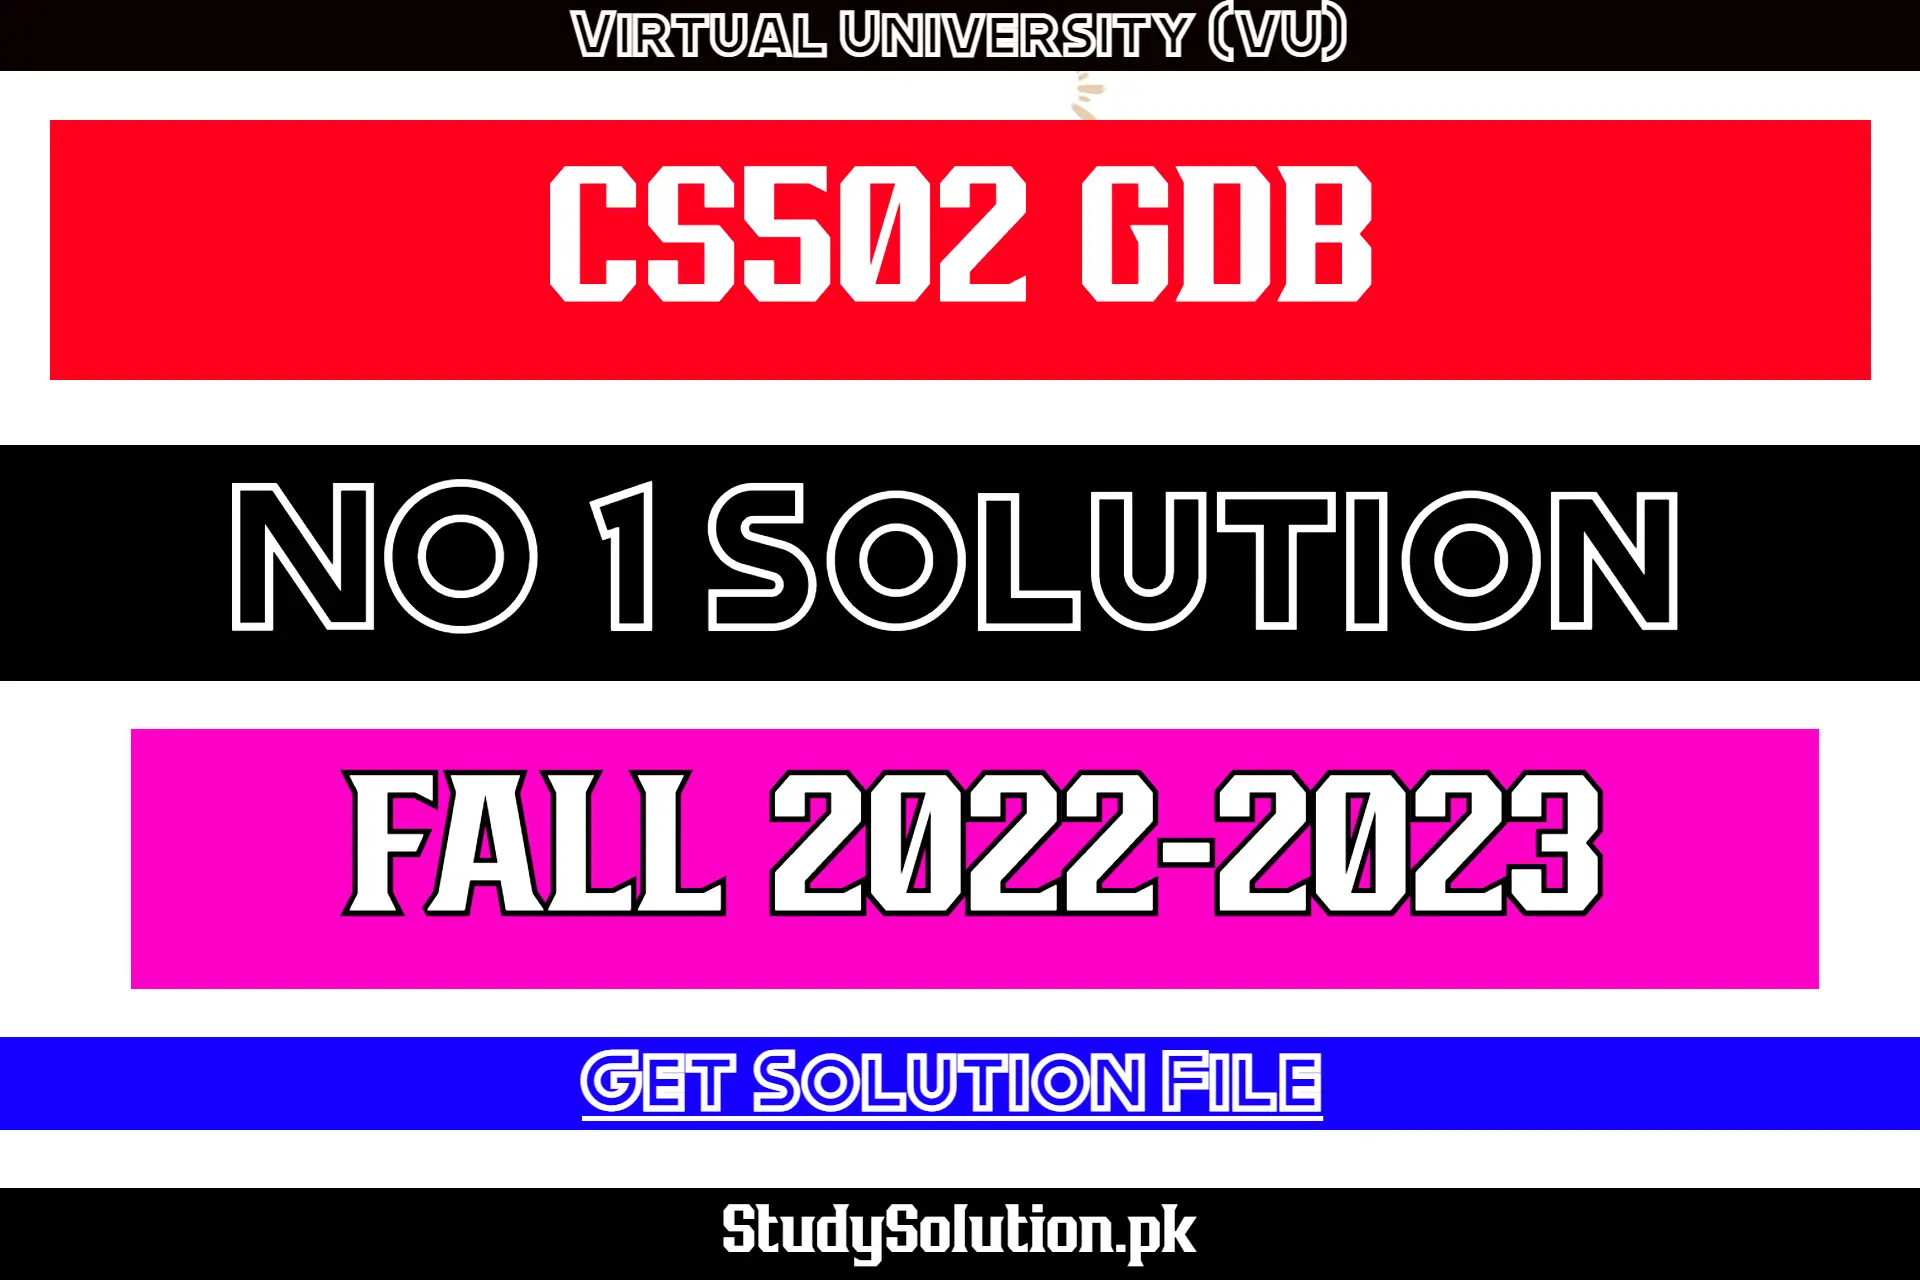 CS502 GDB No 1 Solution Fall 2022